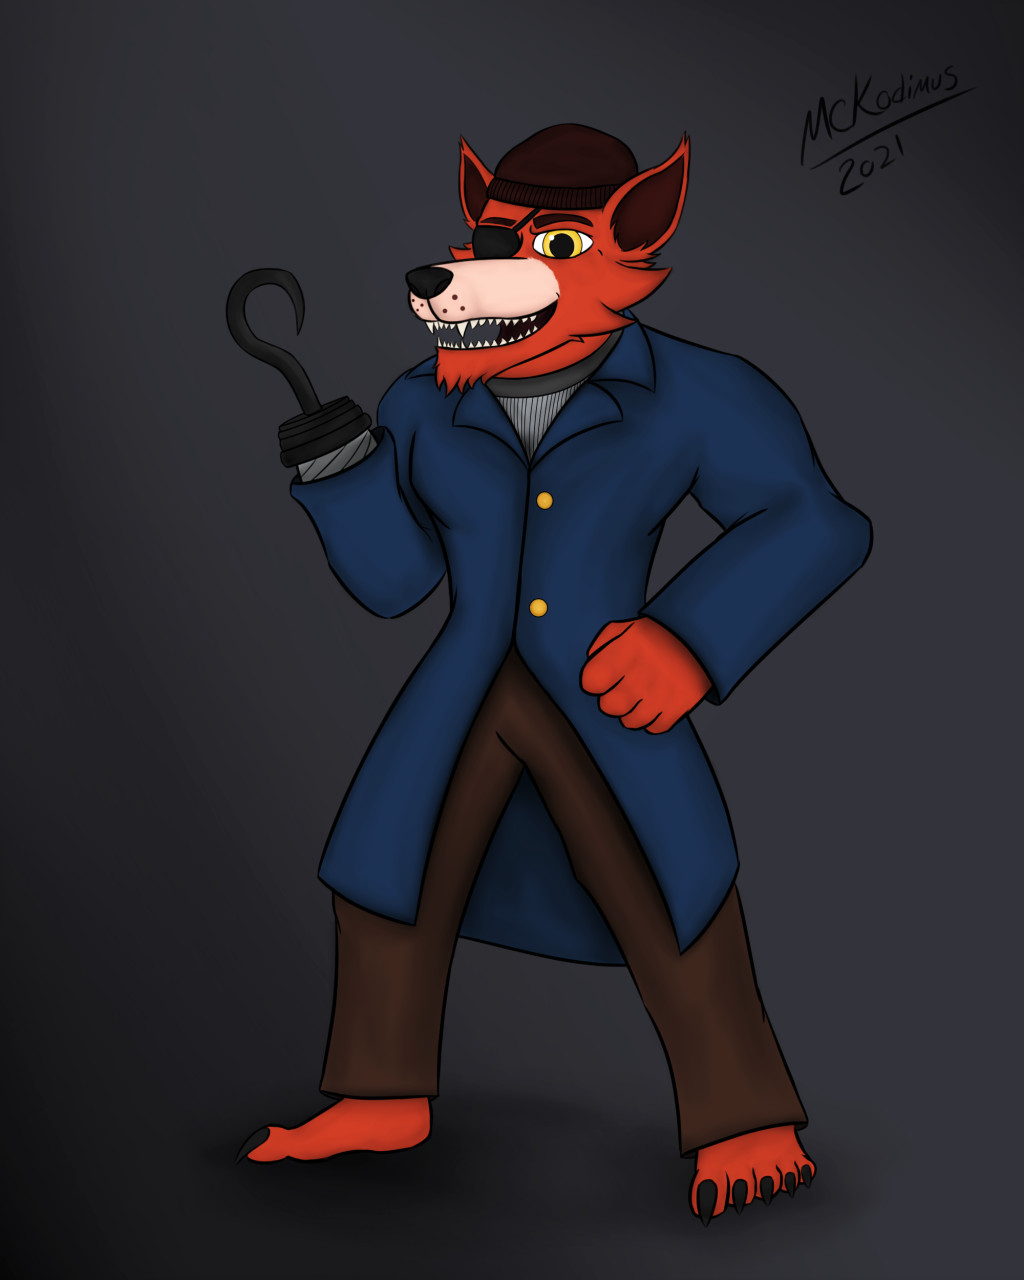 Captain Foxy (FNAF SB) by A-Dreamare on DeviantArt